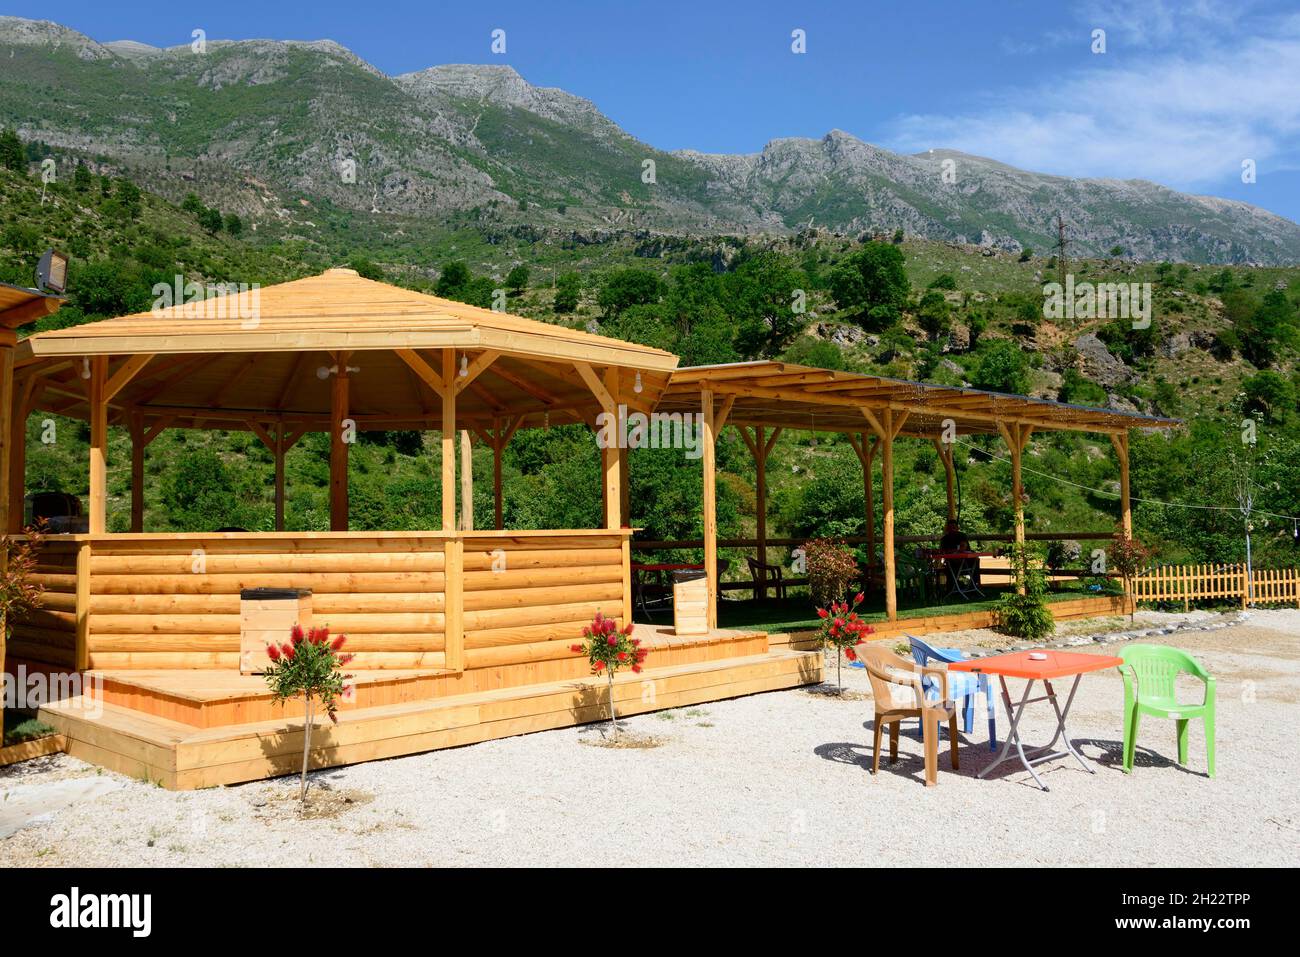 Pavilion at Uji i Ftothe, Albania Stock Photo